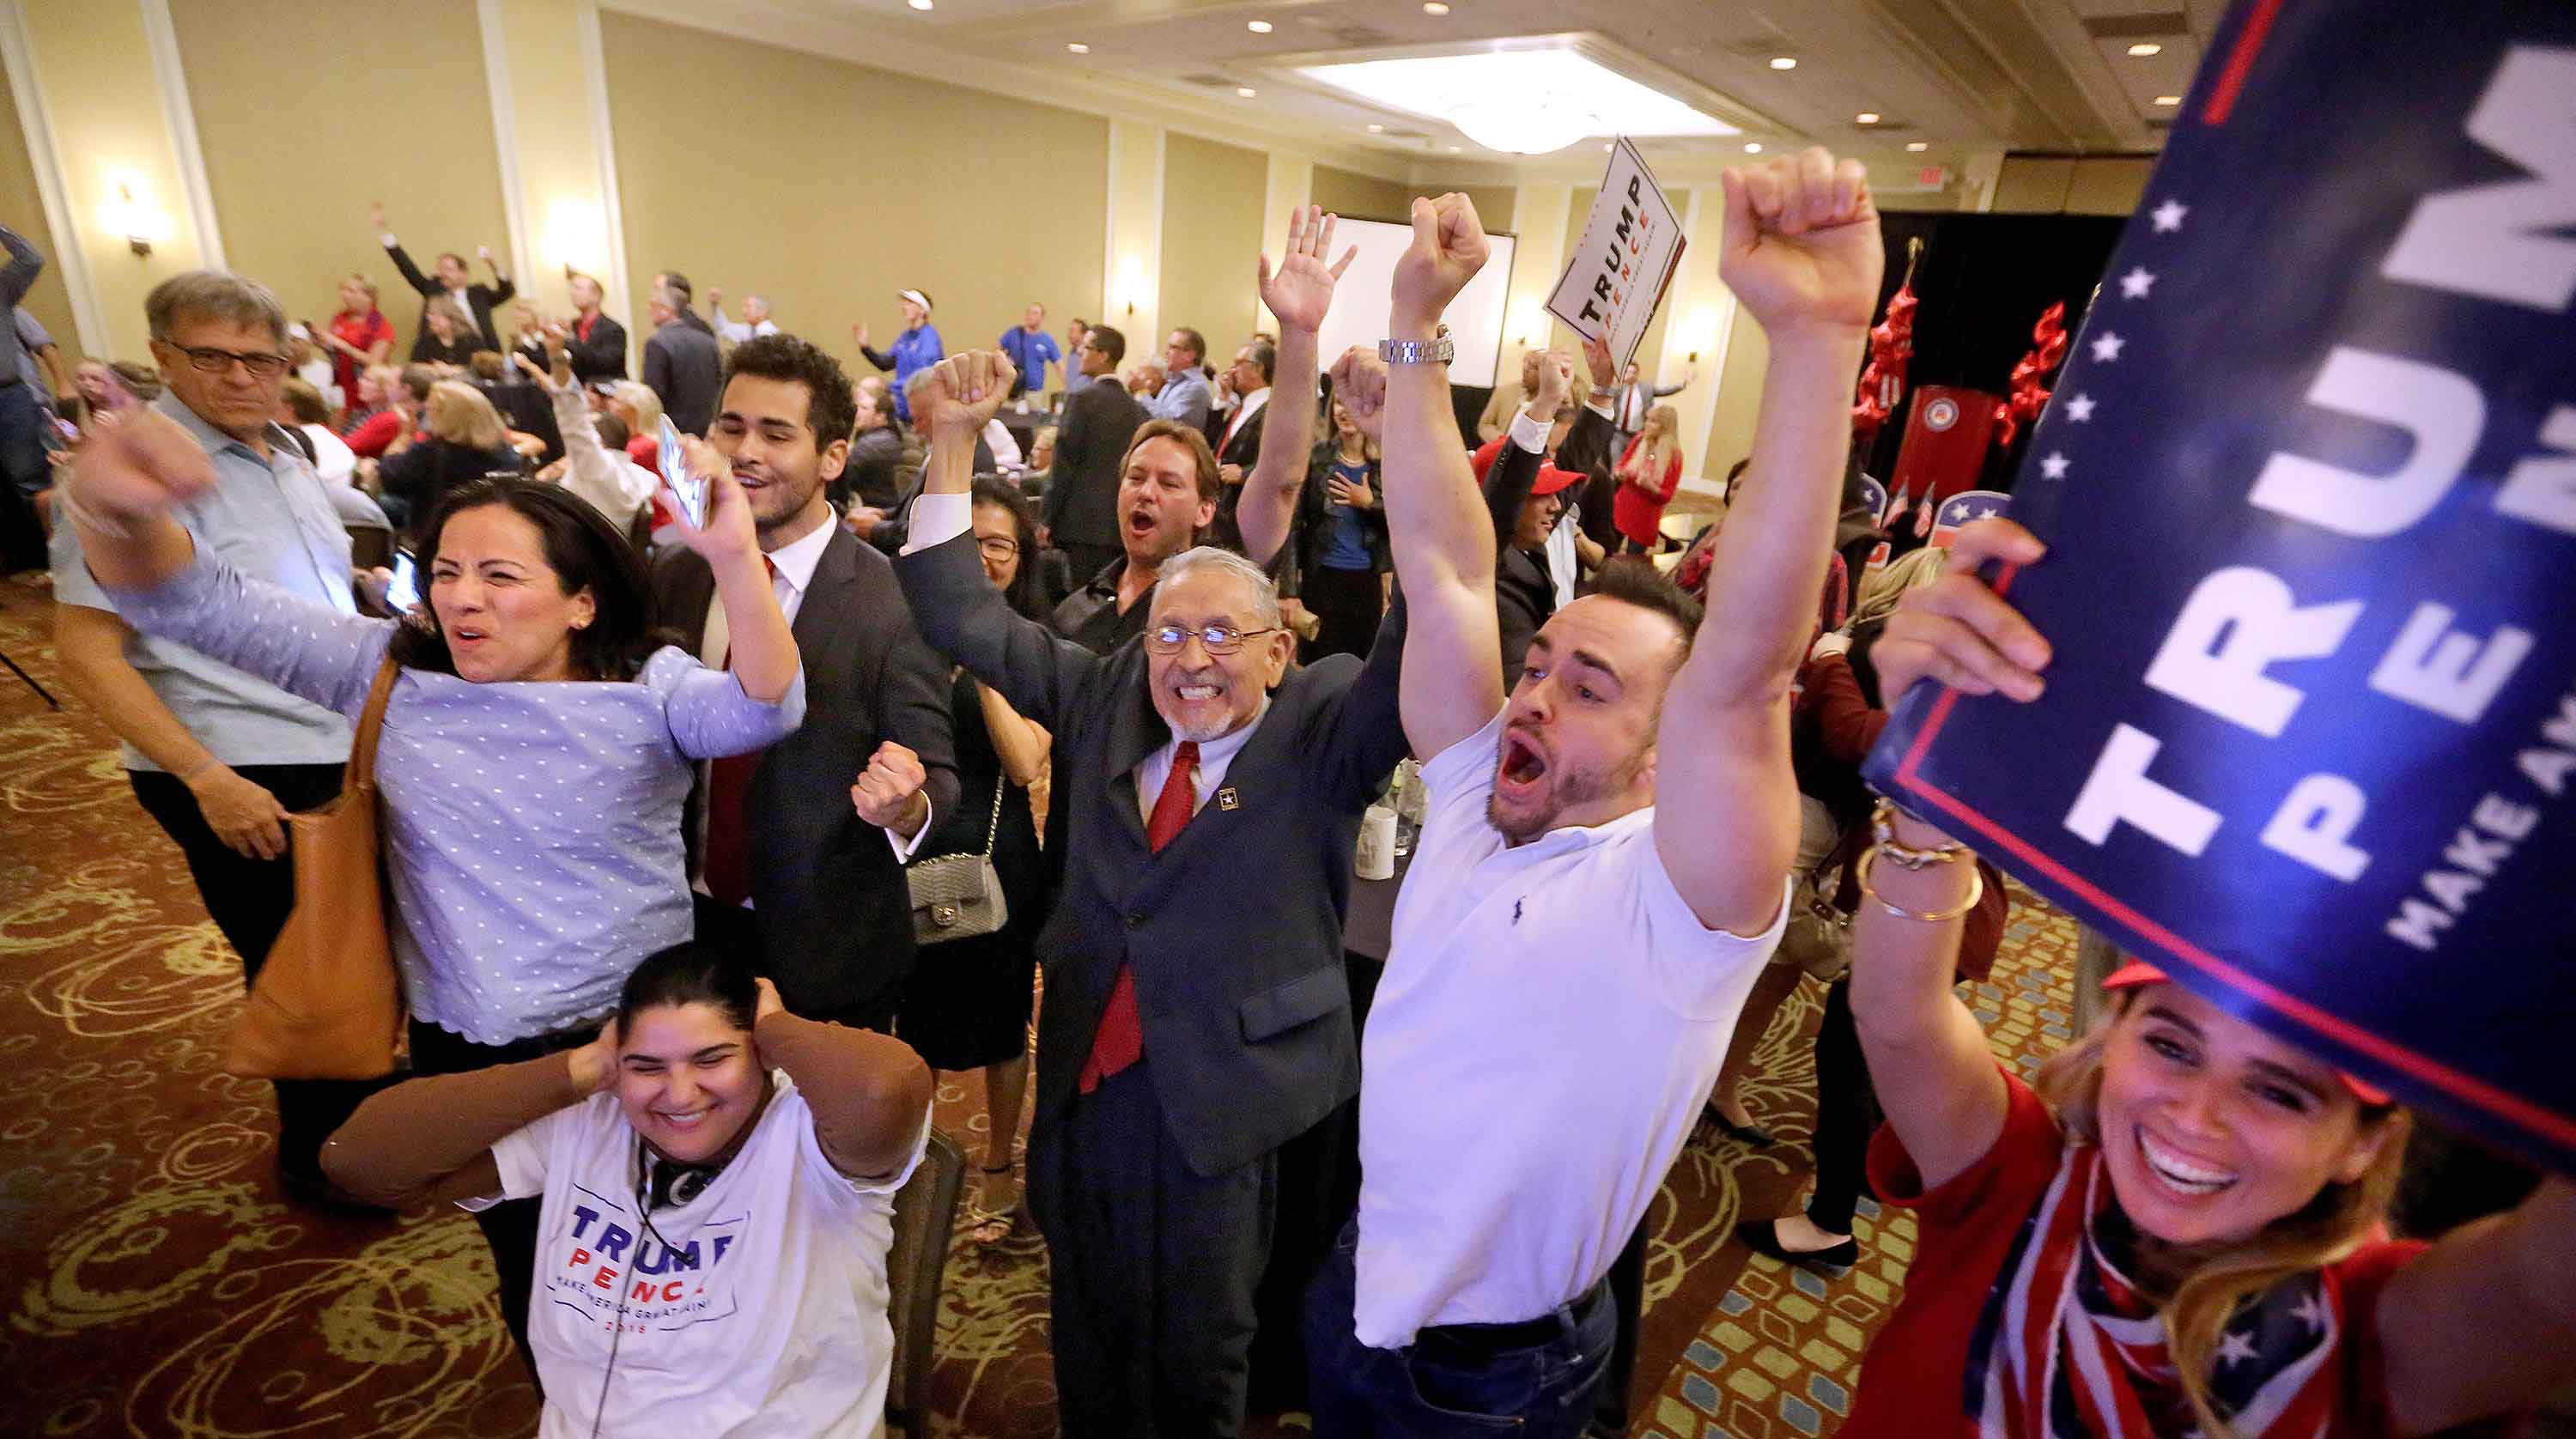 Trump supporters react as Fox News predict Donald Trump will win North Carolina at the Republican Party of Seminole County, Fla. Election Watch event on Nov. 8, 2016 in Altamonte Springs, near Orlando, Tuesday, Nov. 8, 2016. (Joe Burbank/Orlando Sentinel/TNS)